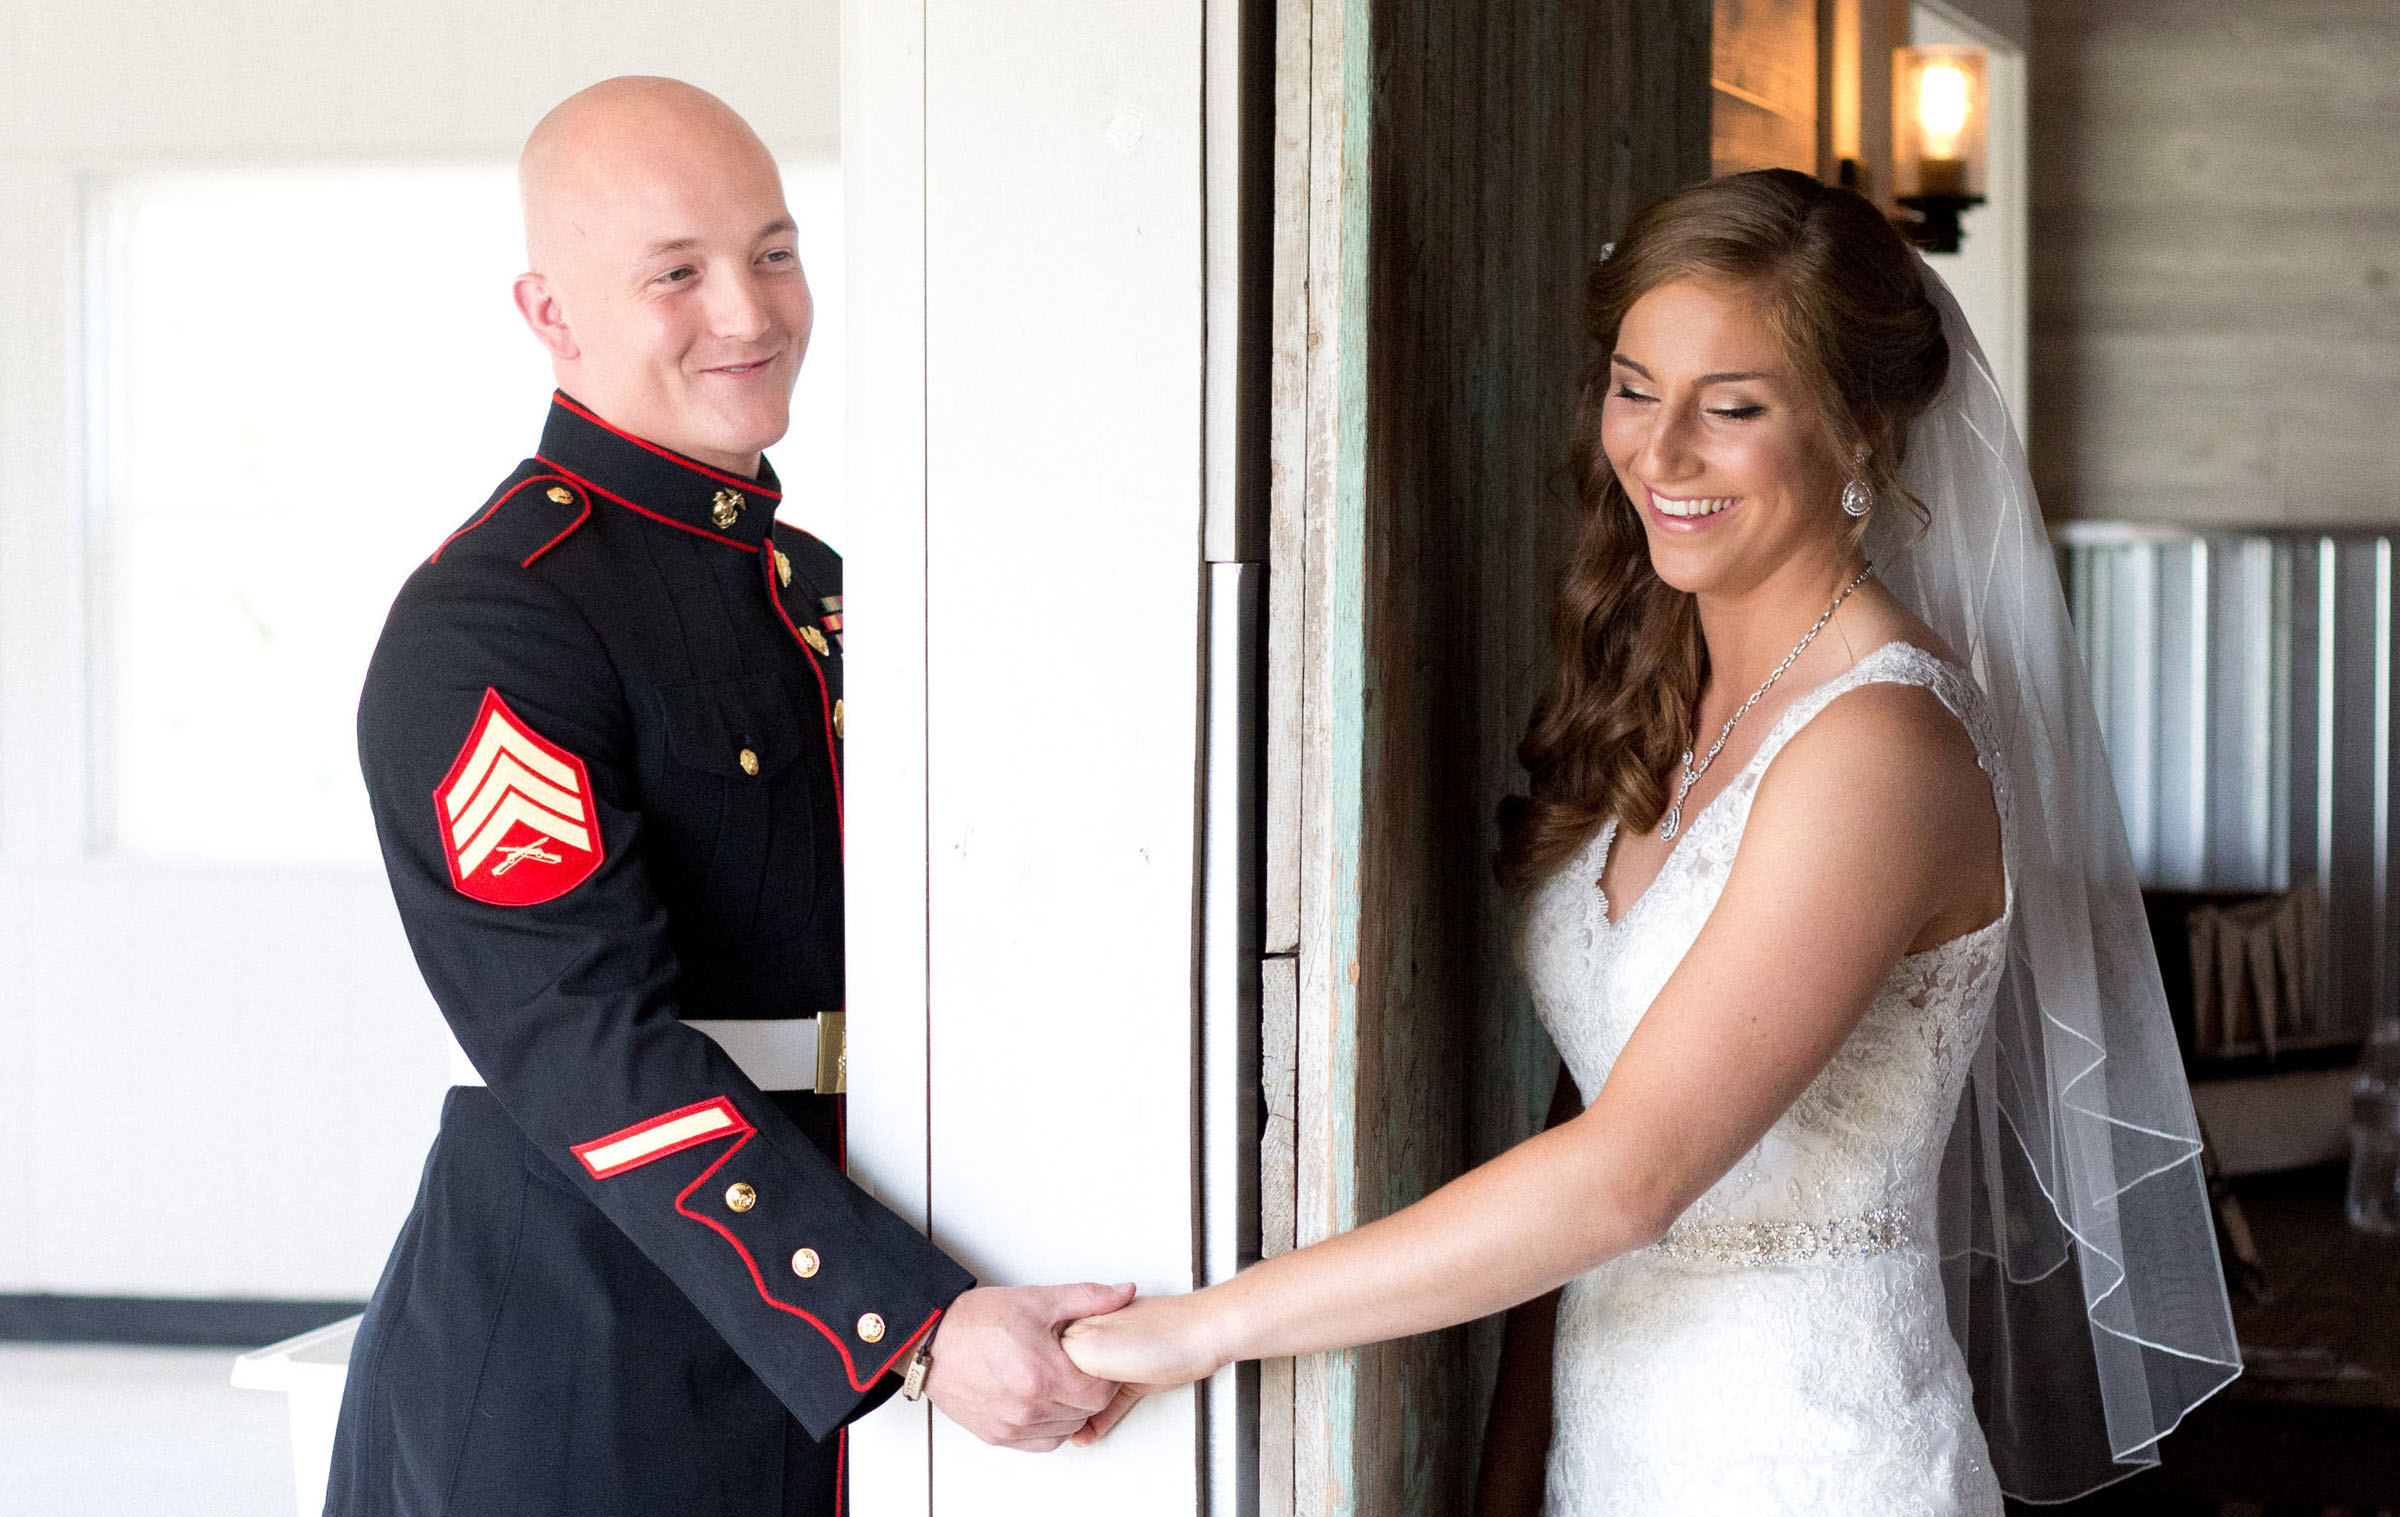 Kirk Kara military couple during wedding photoshoot holding hands